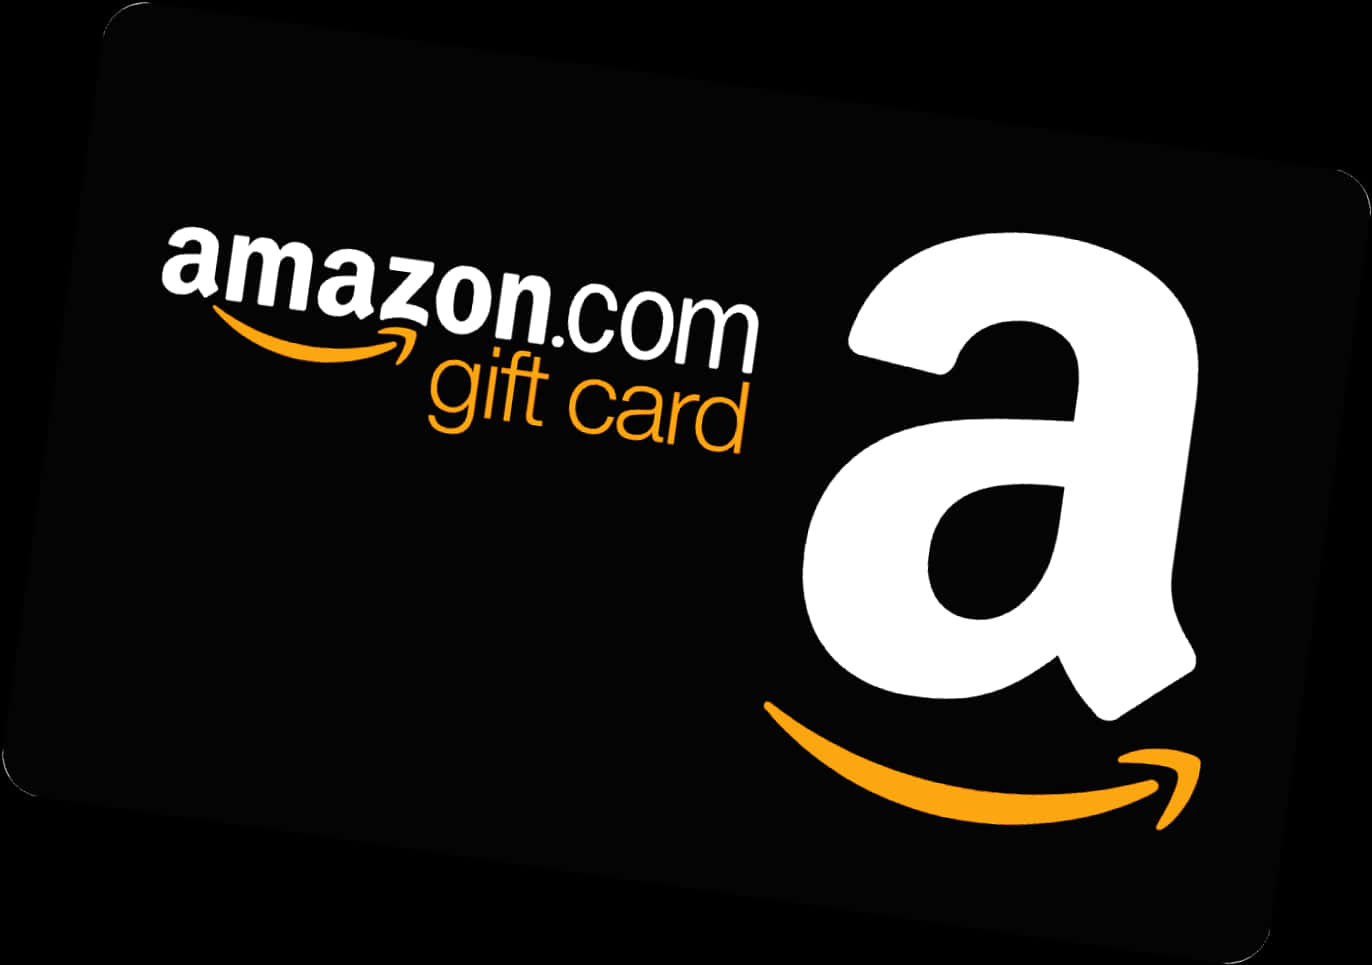 Amazon Gift Card Black Design PNG image